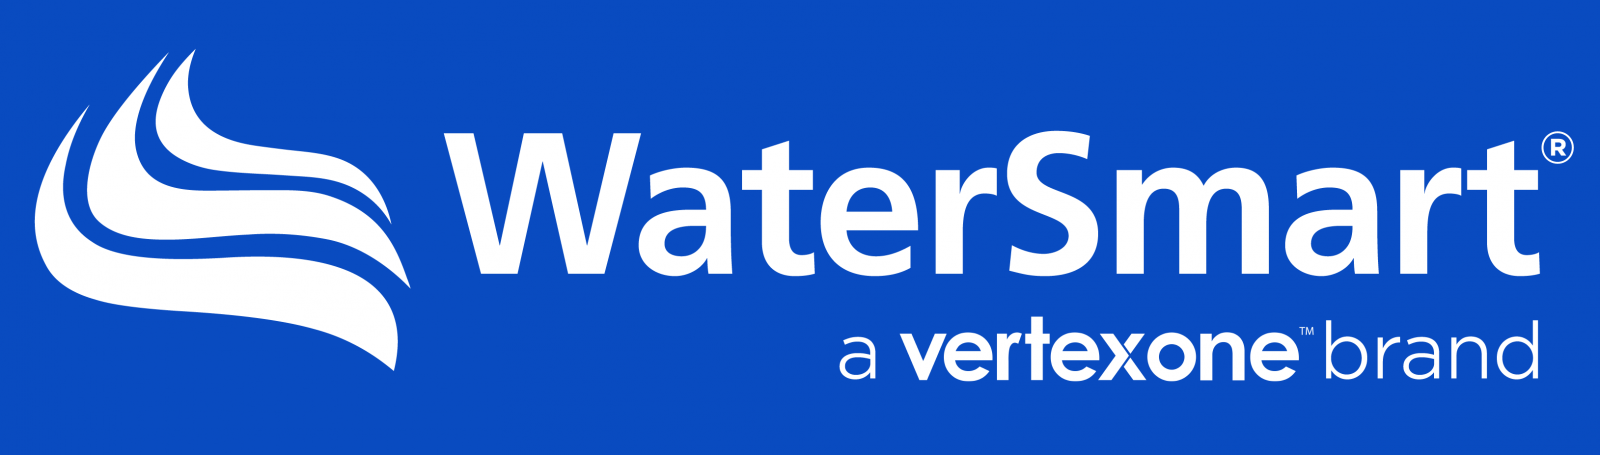 WaterSmart Logo